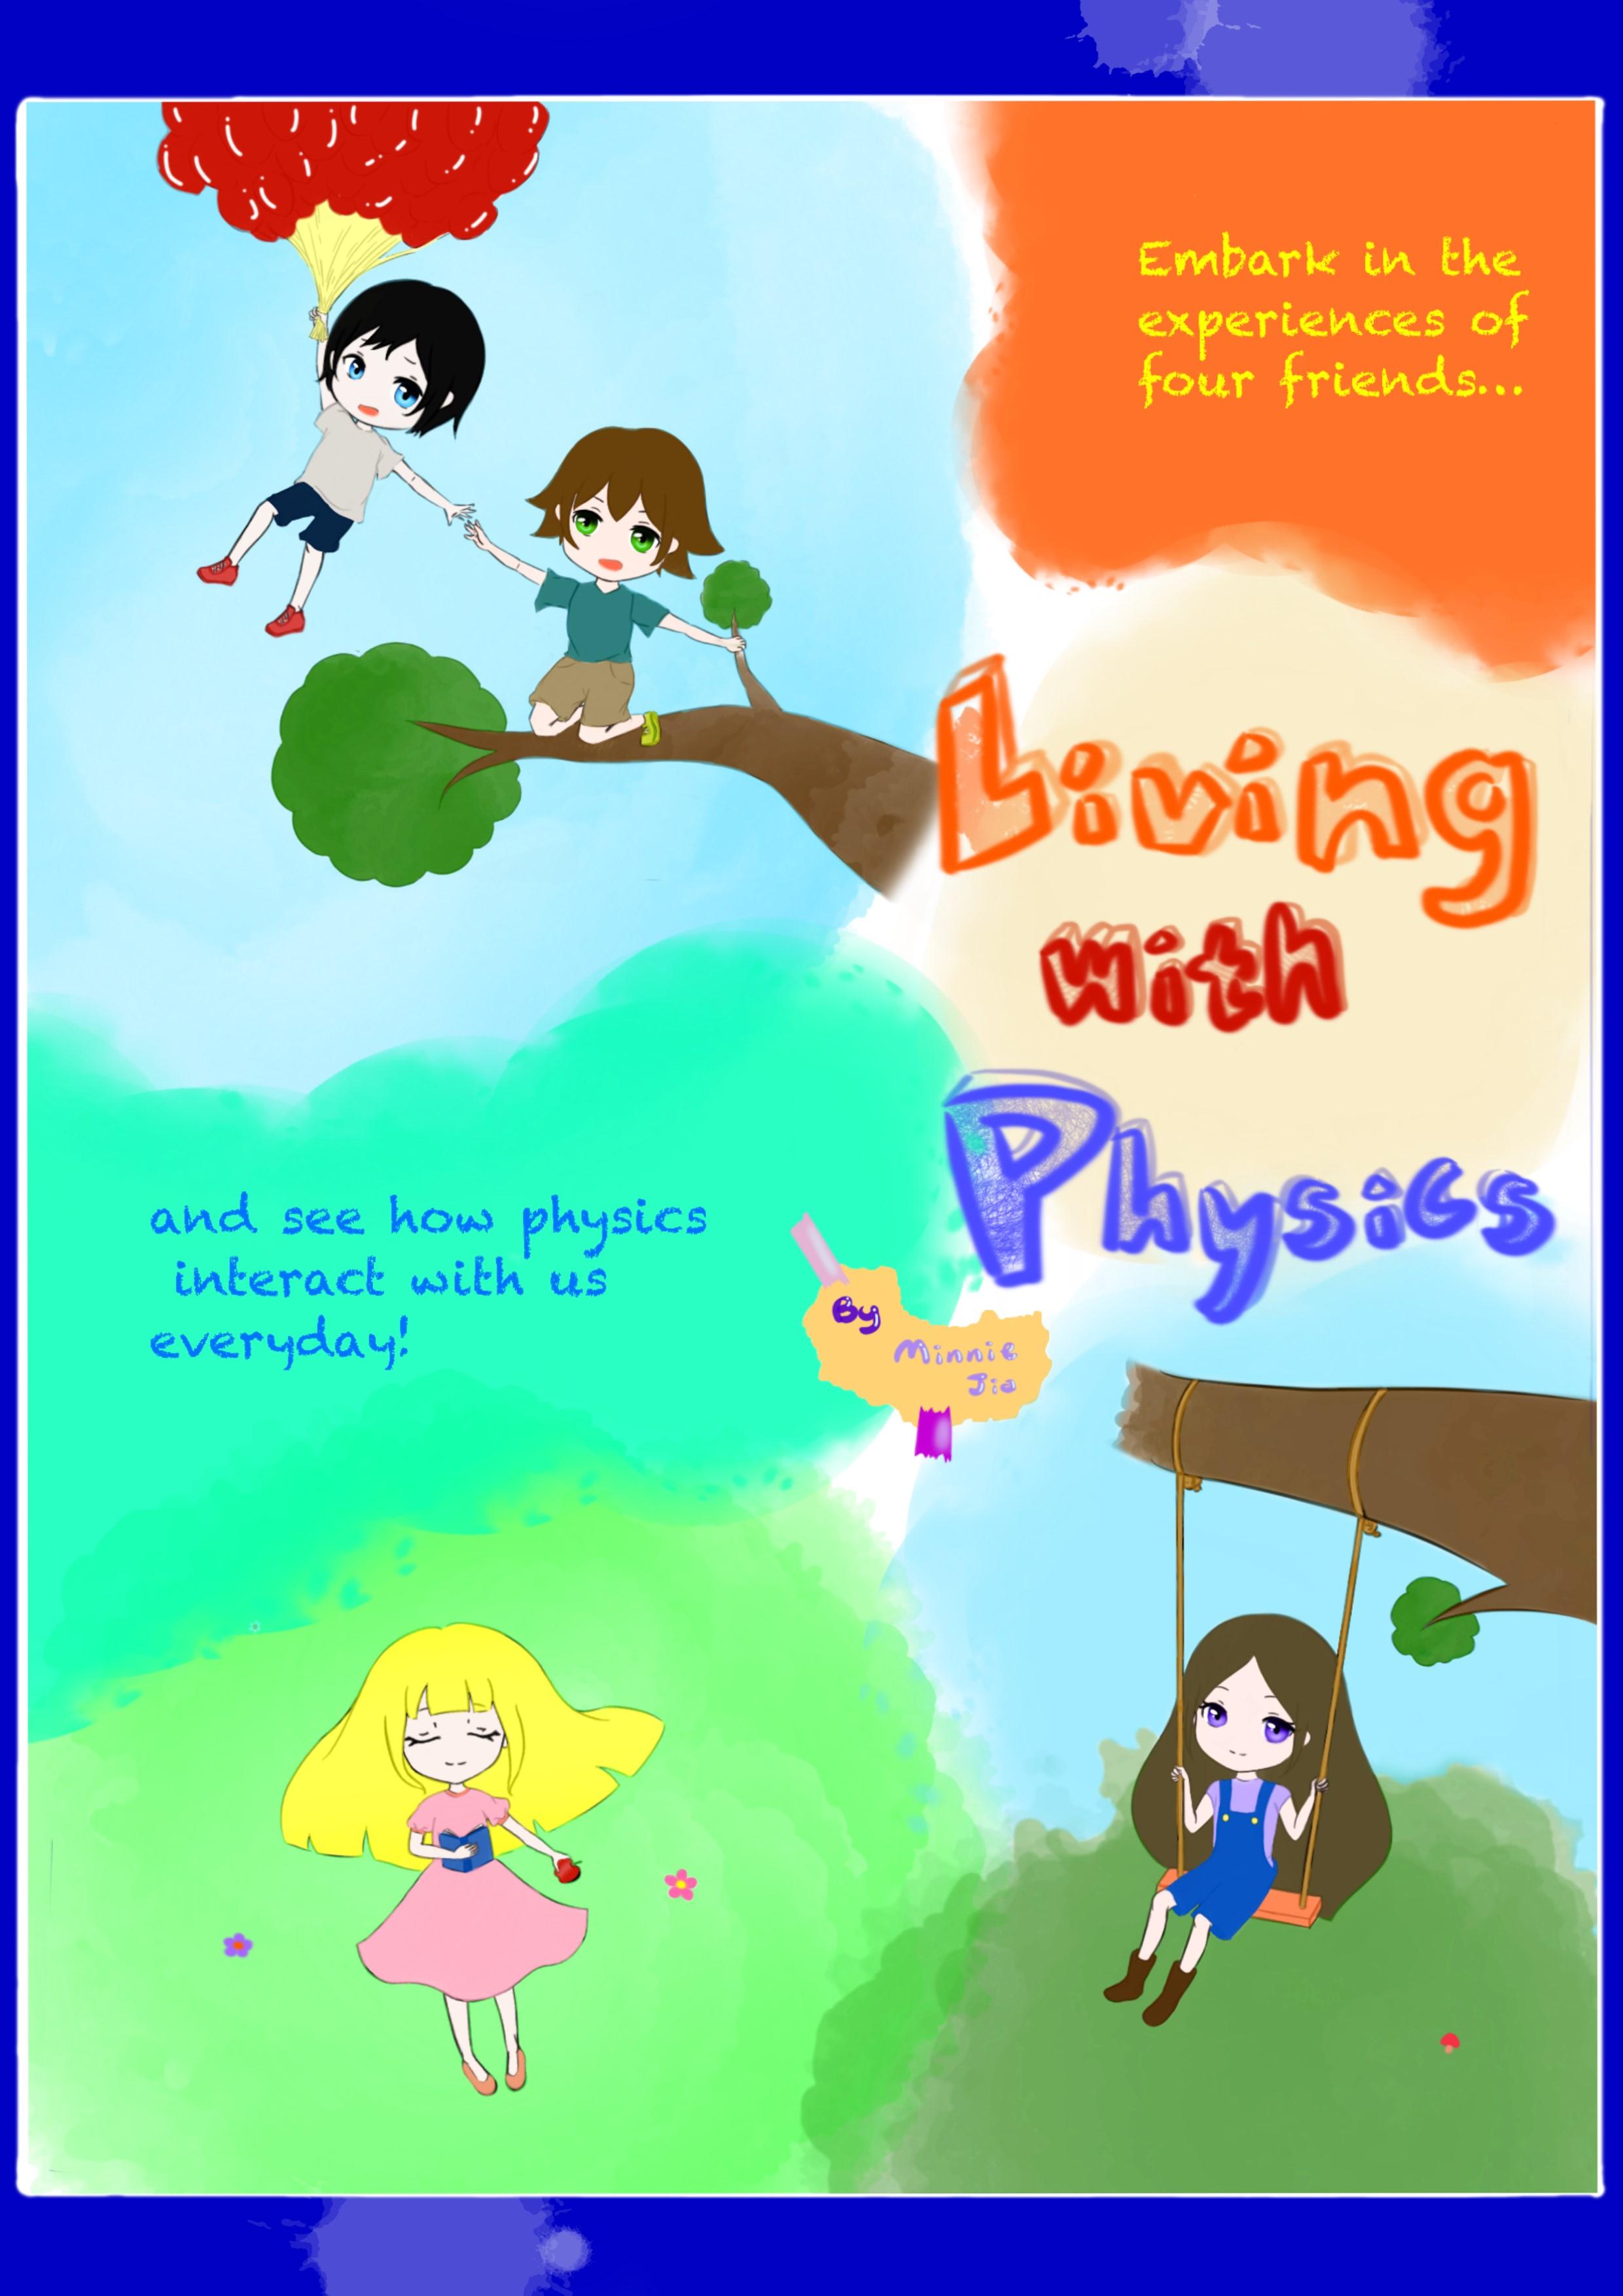 Children's physics comic